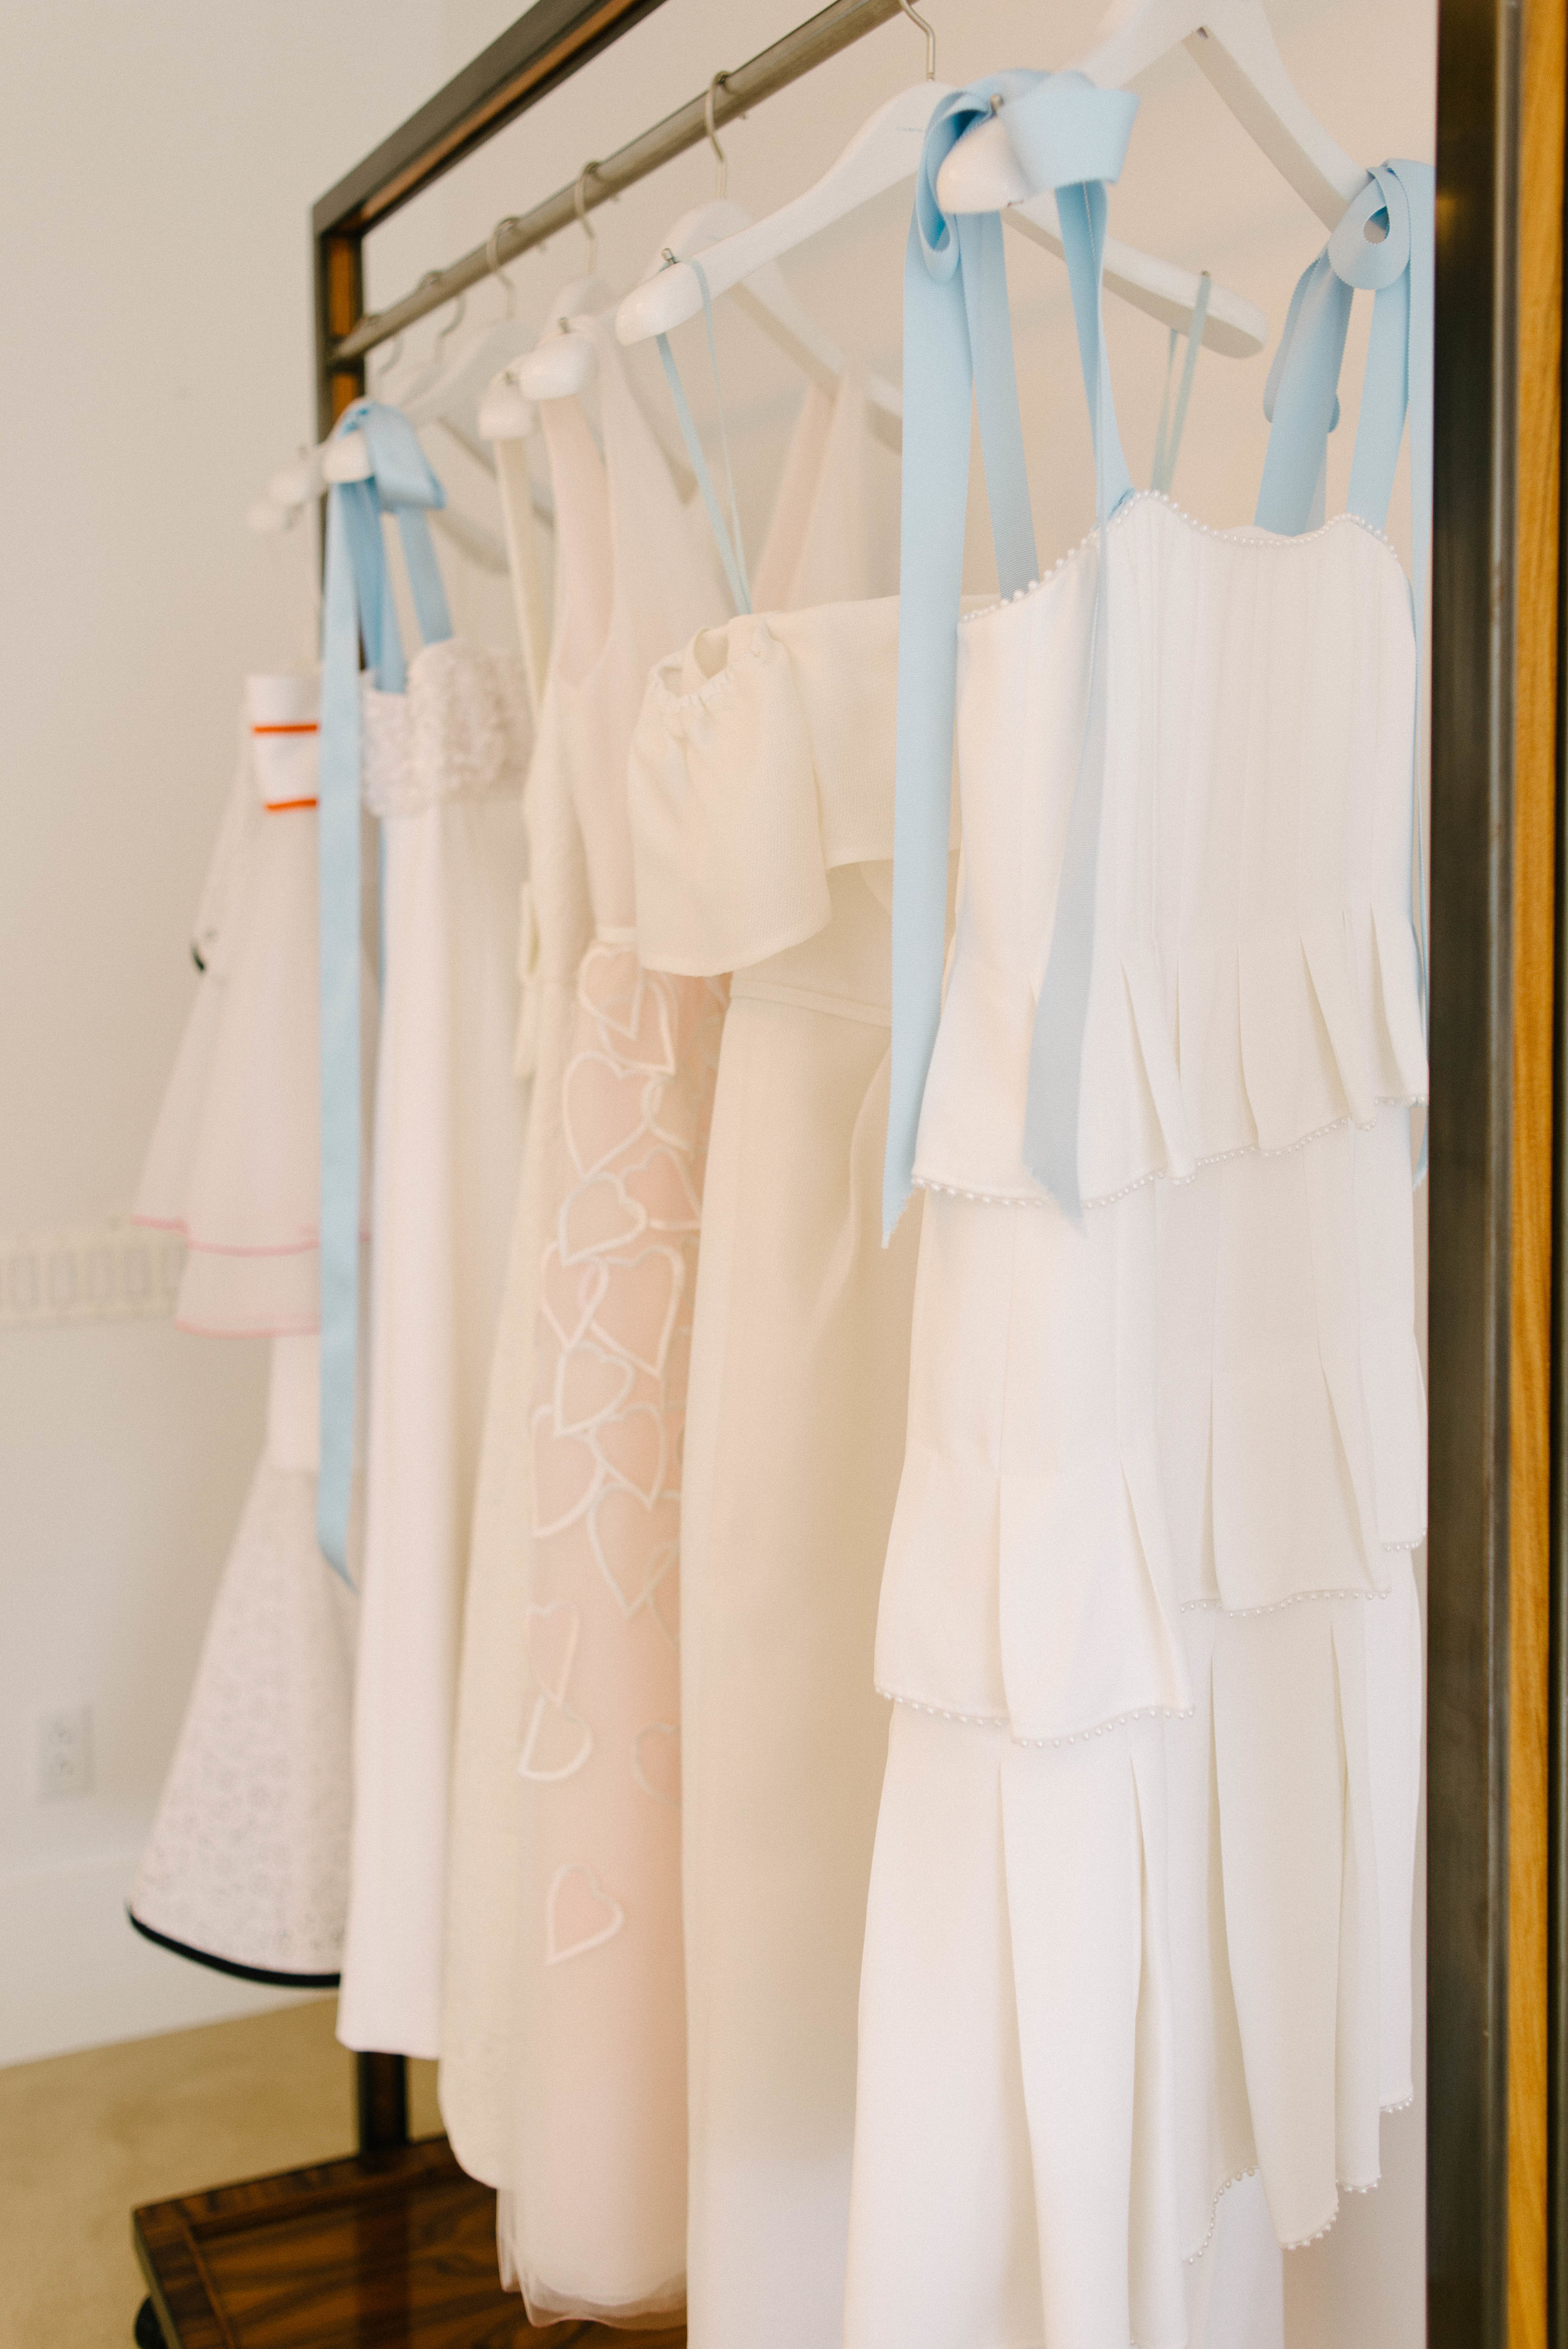 Carolina Herrera Collection 2019, Bridal Fashion Week, New York Bridal Market, New Carolina Herrera Collection, Little White Dress Bridal Shop, Denver CO Wedding Dresses